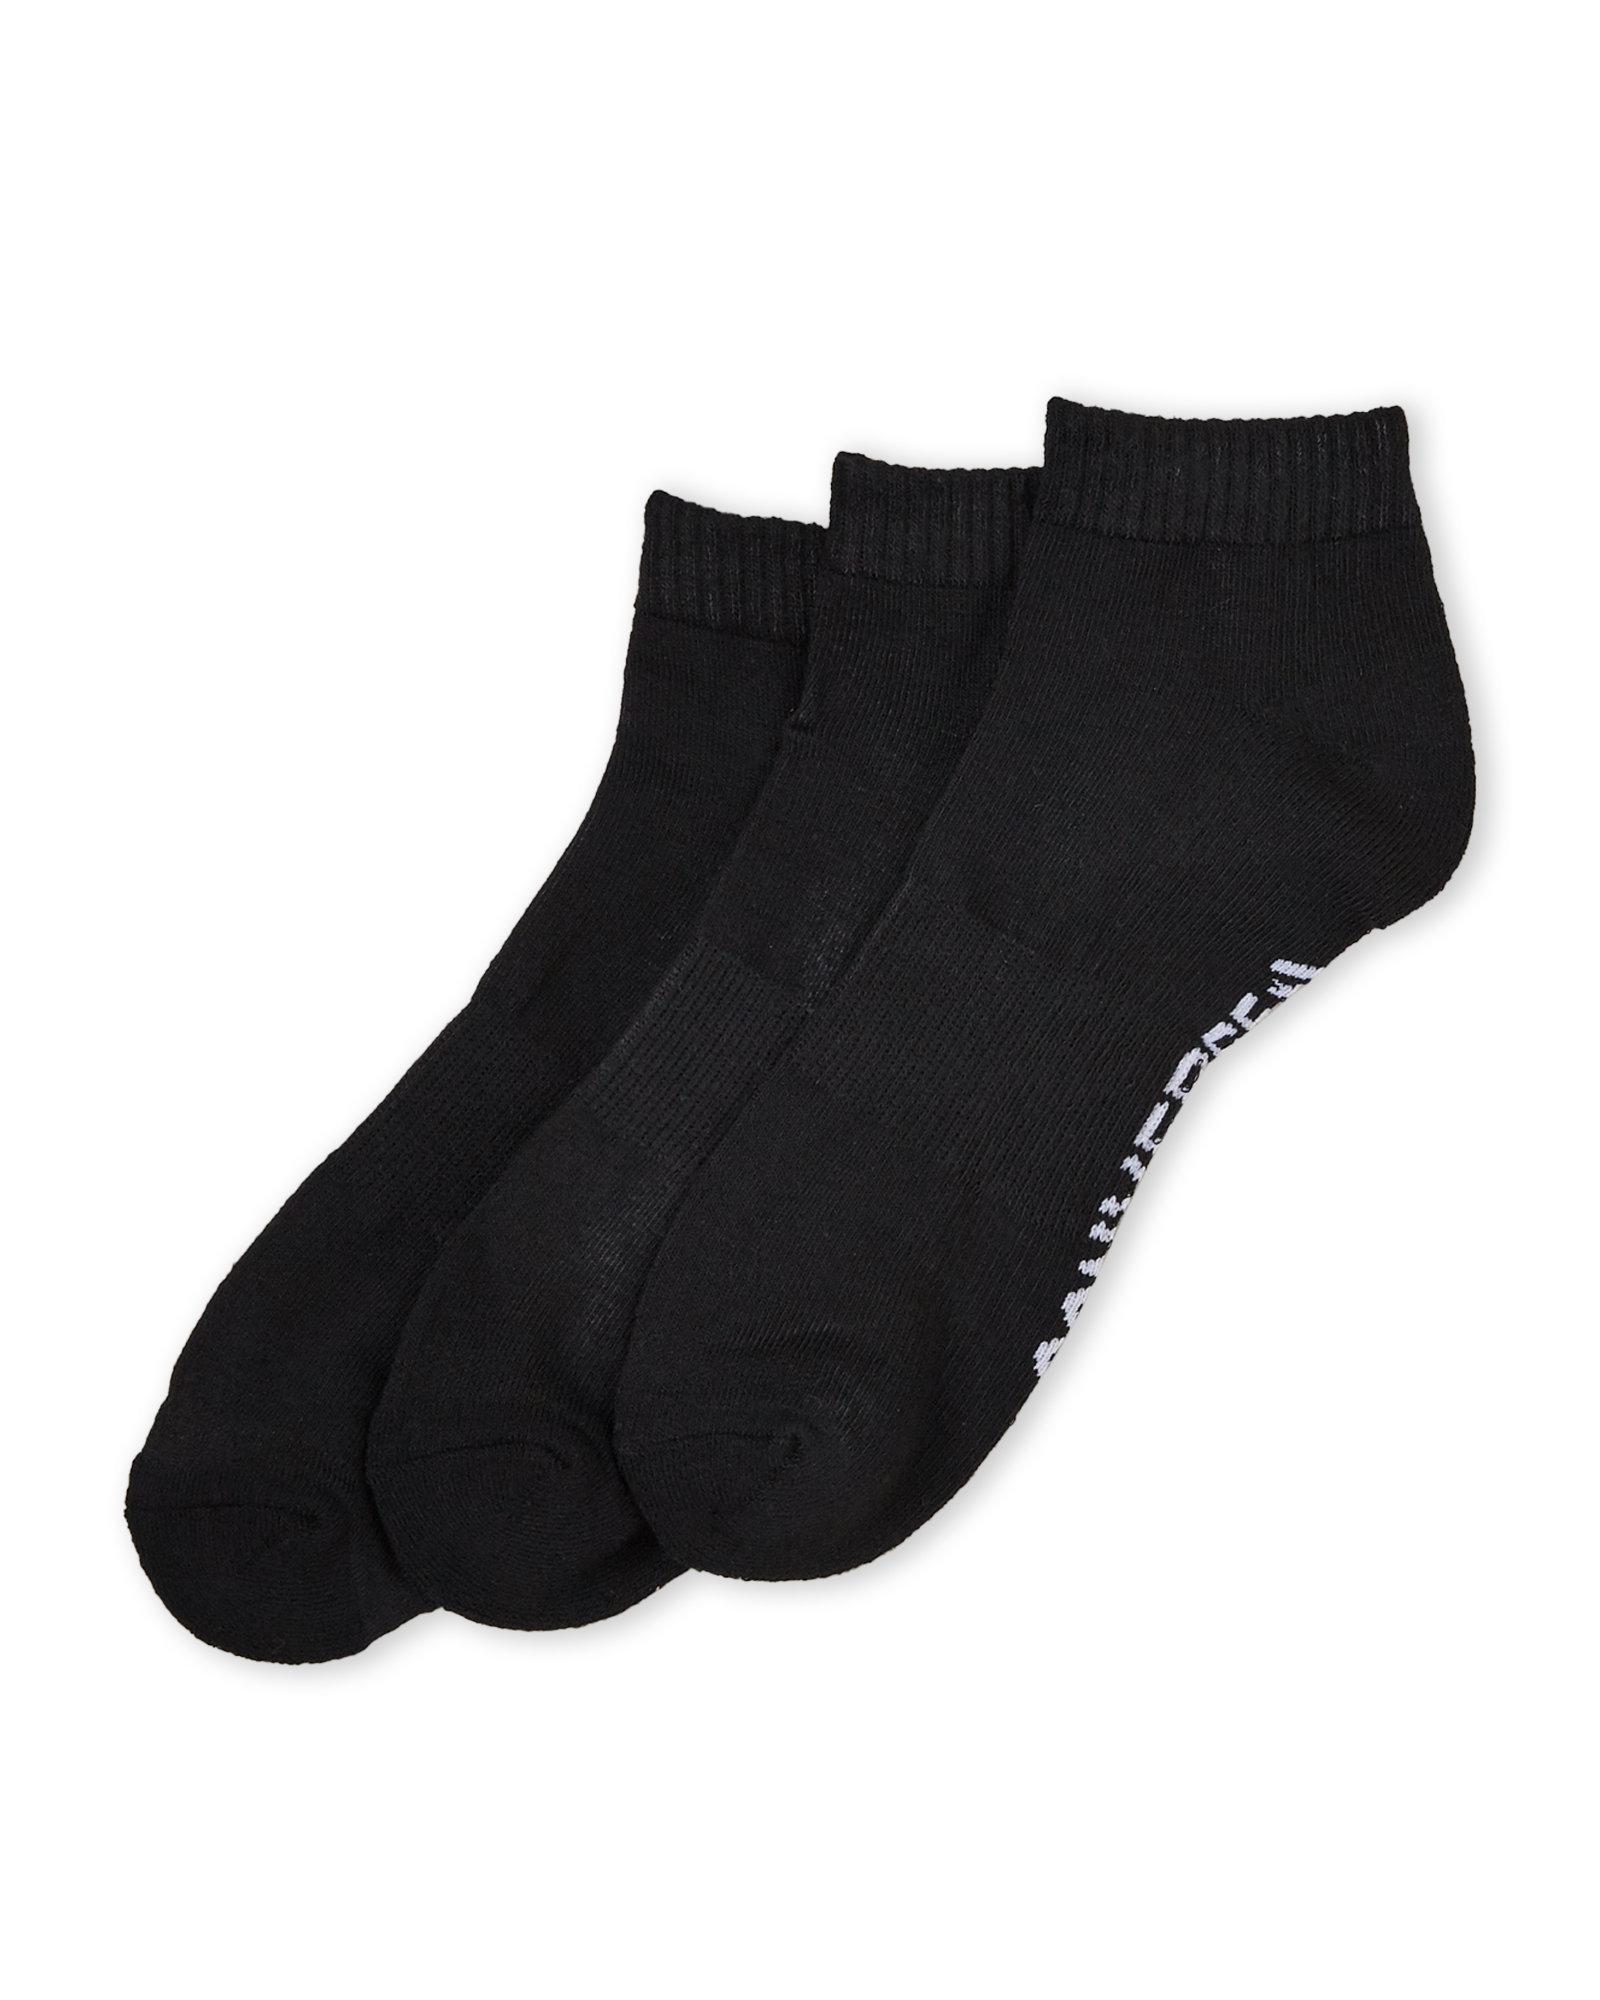 converse quarter socks